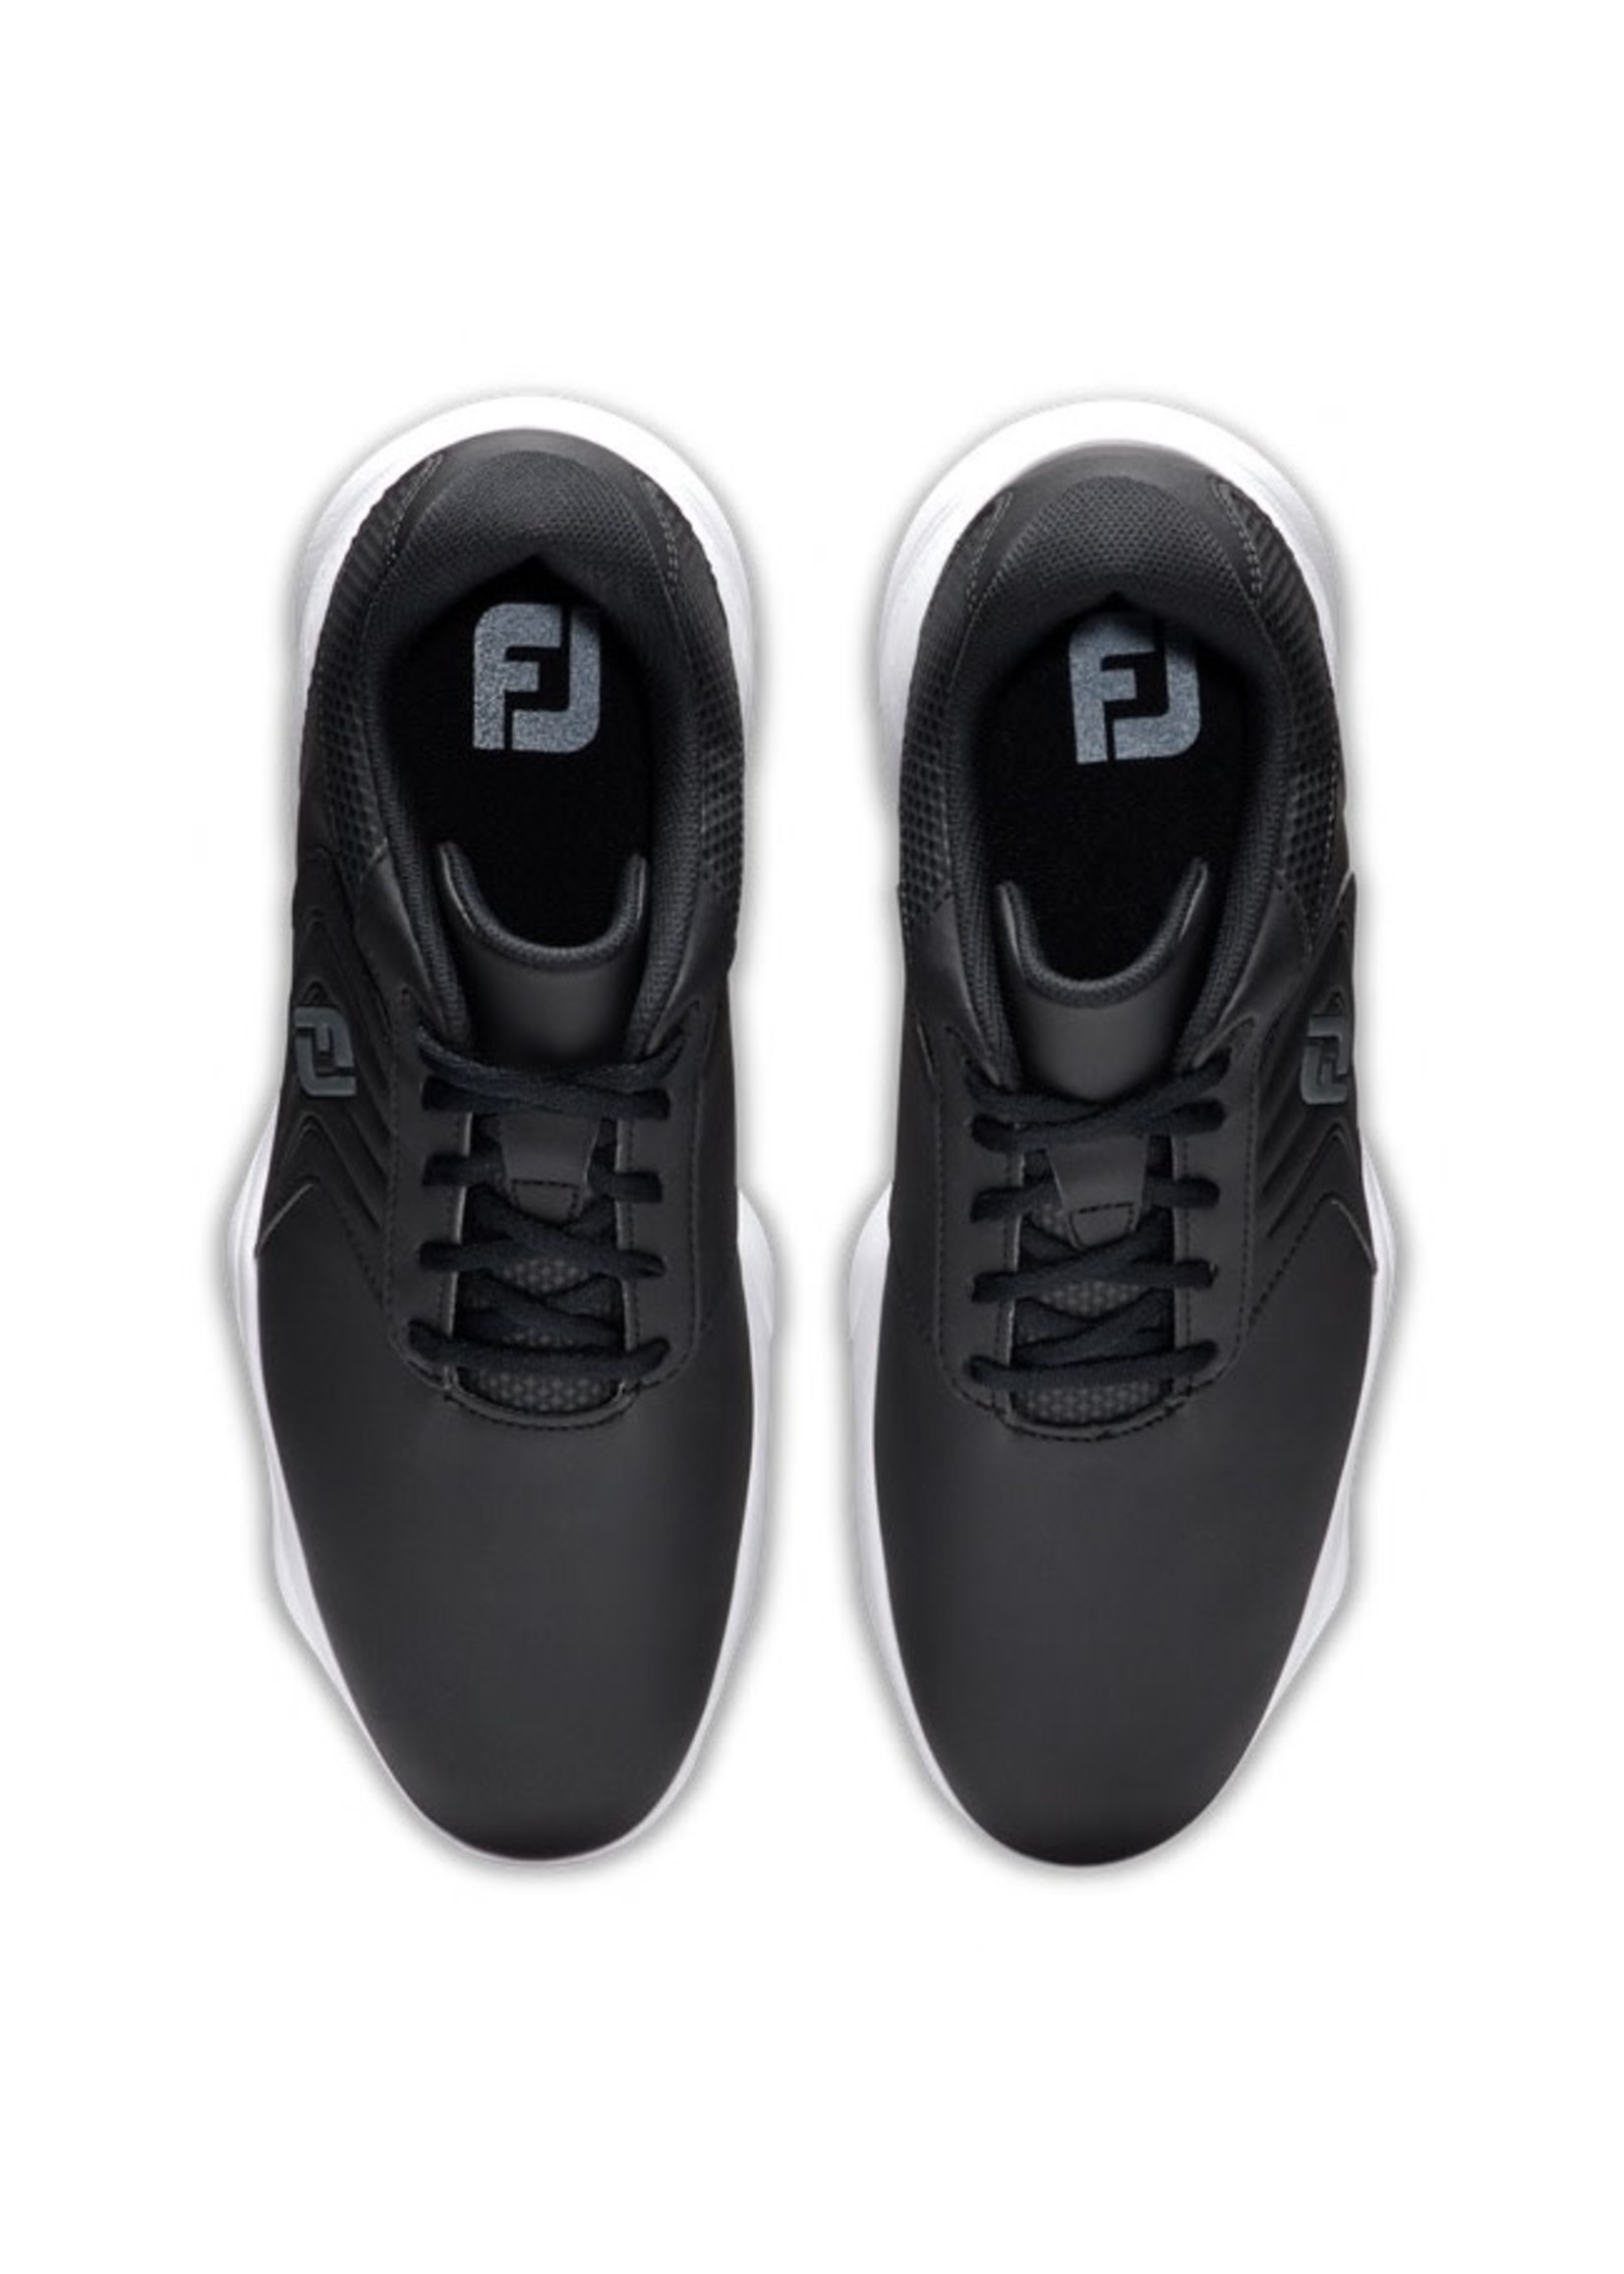 Footjoy FootJoy Ecomfort Mens Golf Shoe (2020) - Black